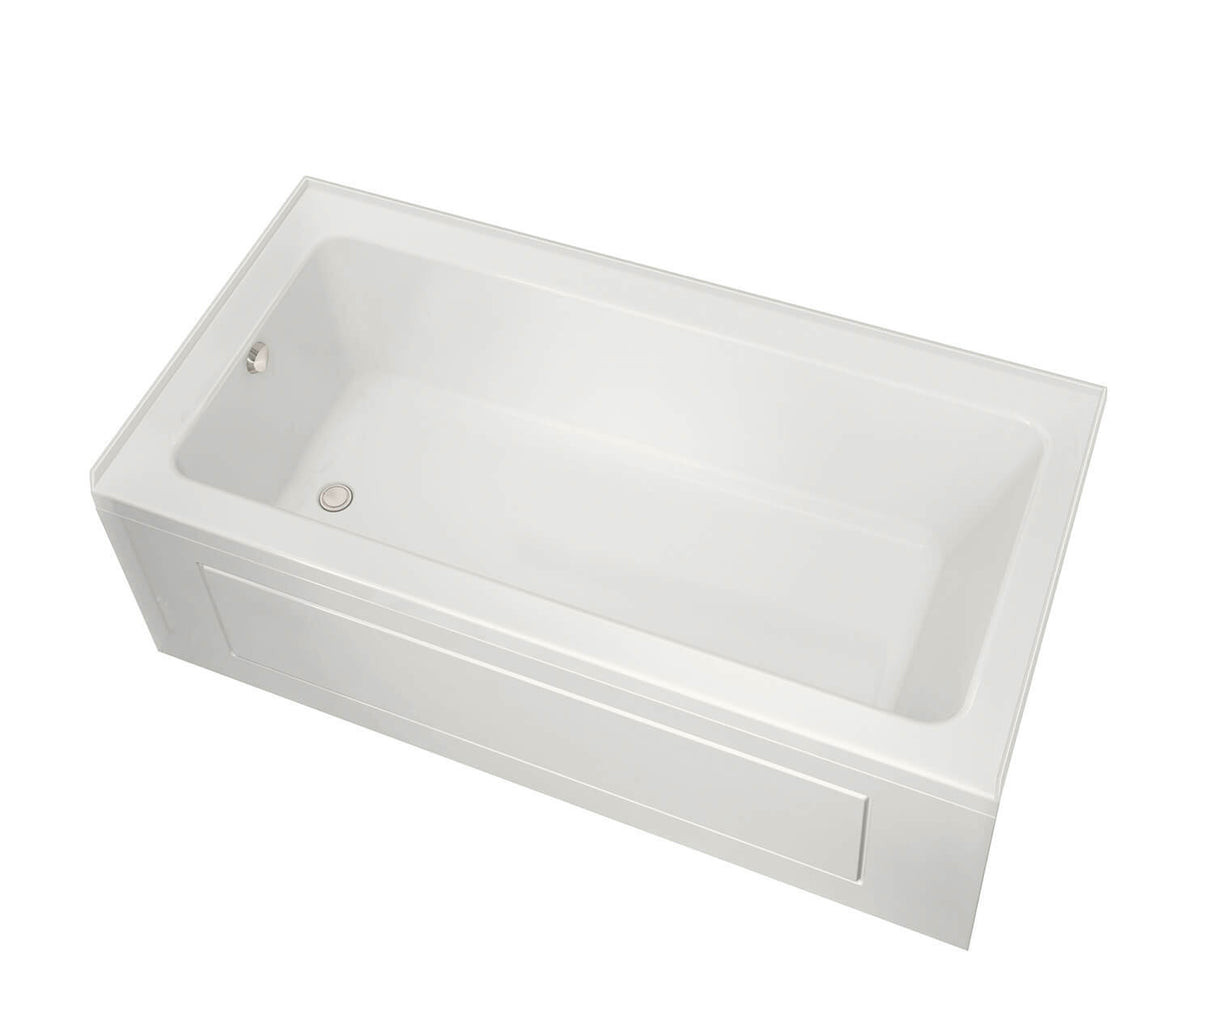 MAAX 106198-R-097-001 Pose 6030 IF Acrylic Alcove Right-Hand Drain Combined Whirlpool & Aeroeffect Bathtub in White